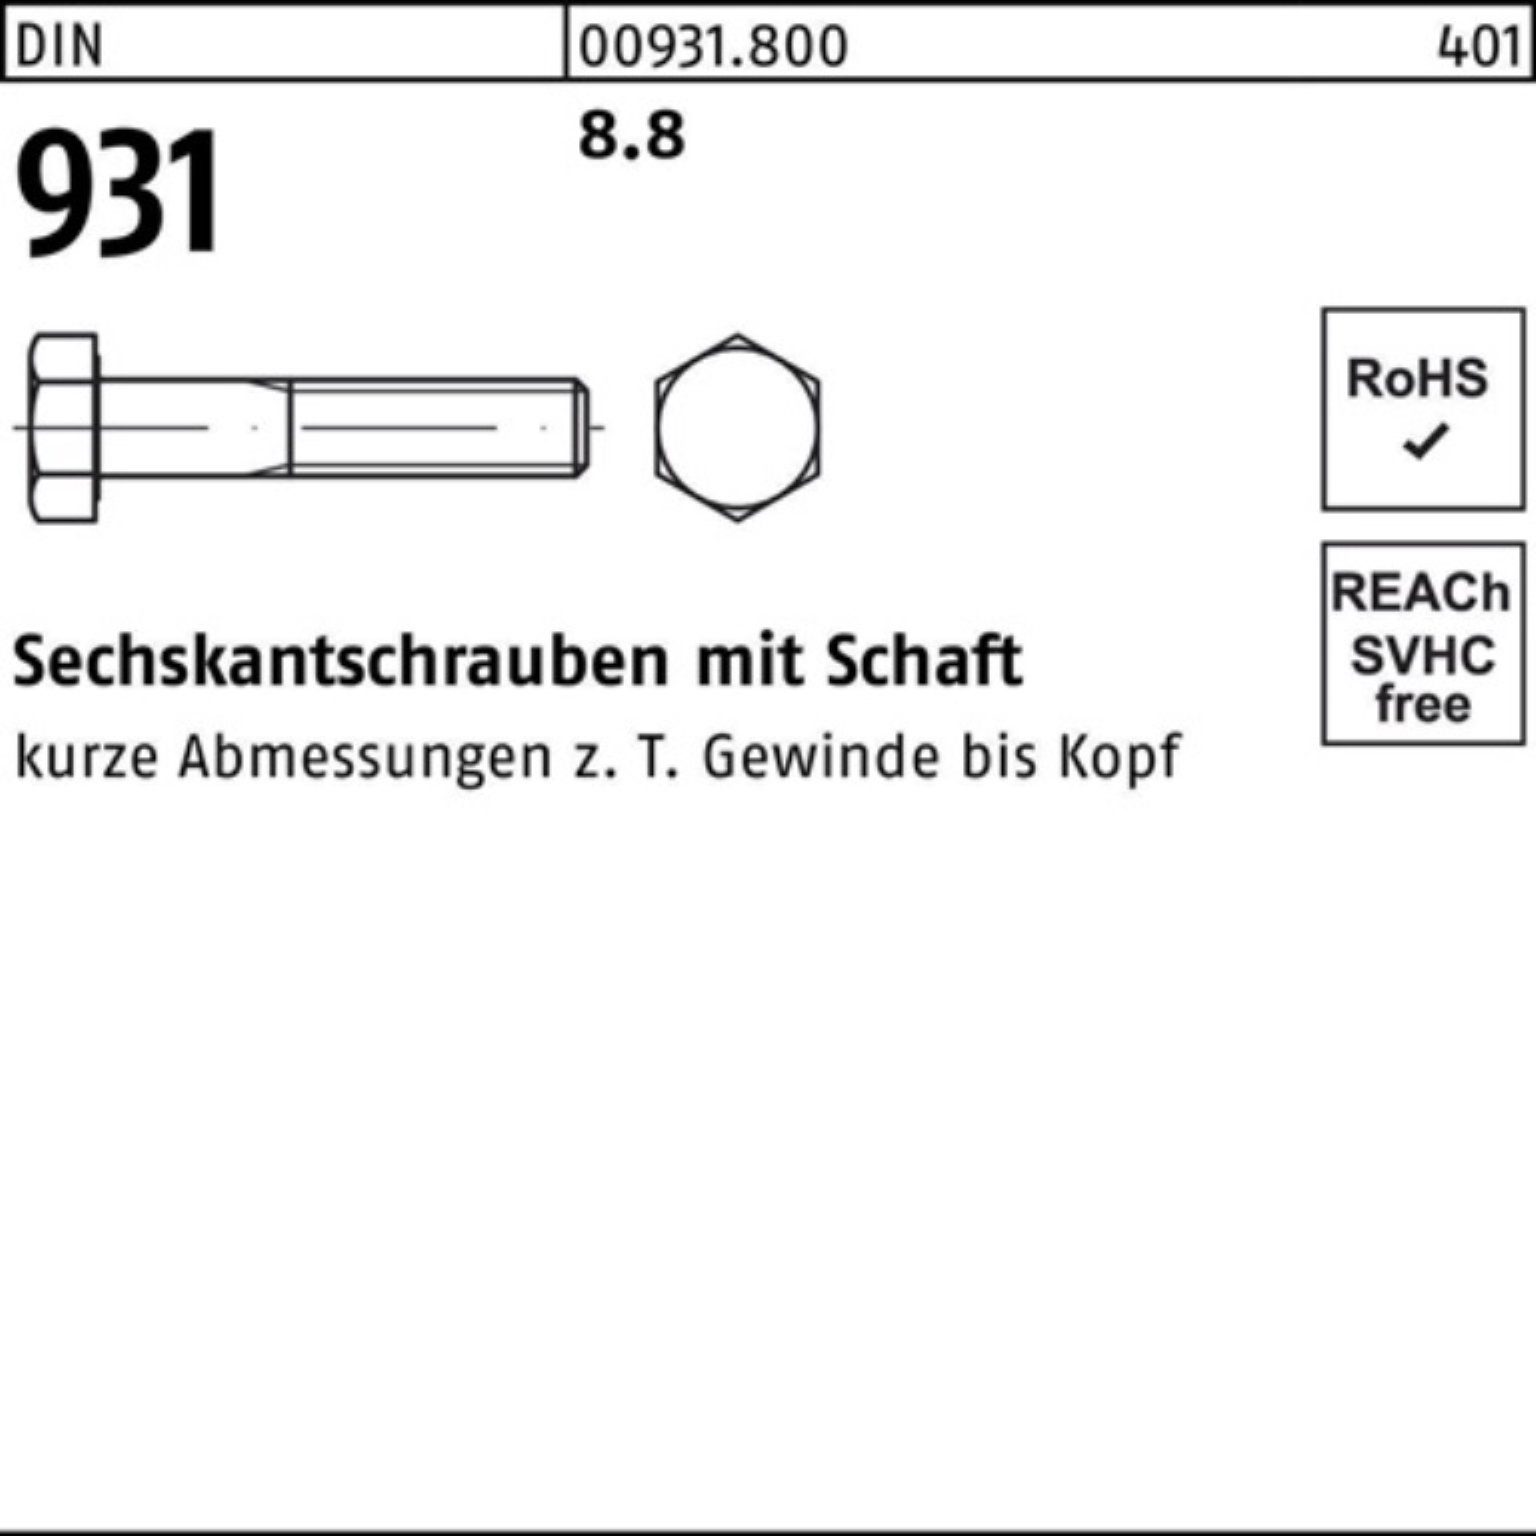 M36x Reyher Sechskantschraube Stück 1 420 DIN Pack DIN 931 8.8 Schaft 100er Sechskantschraube